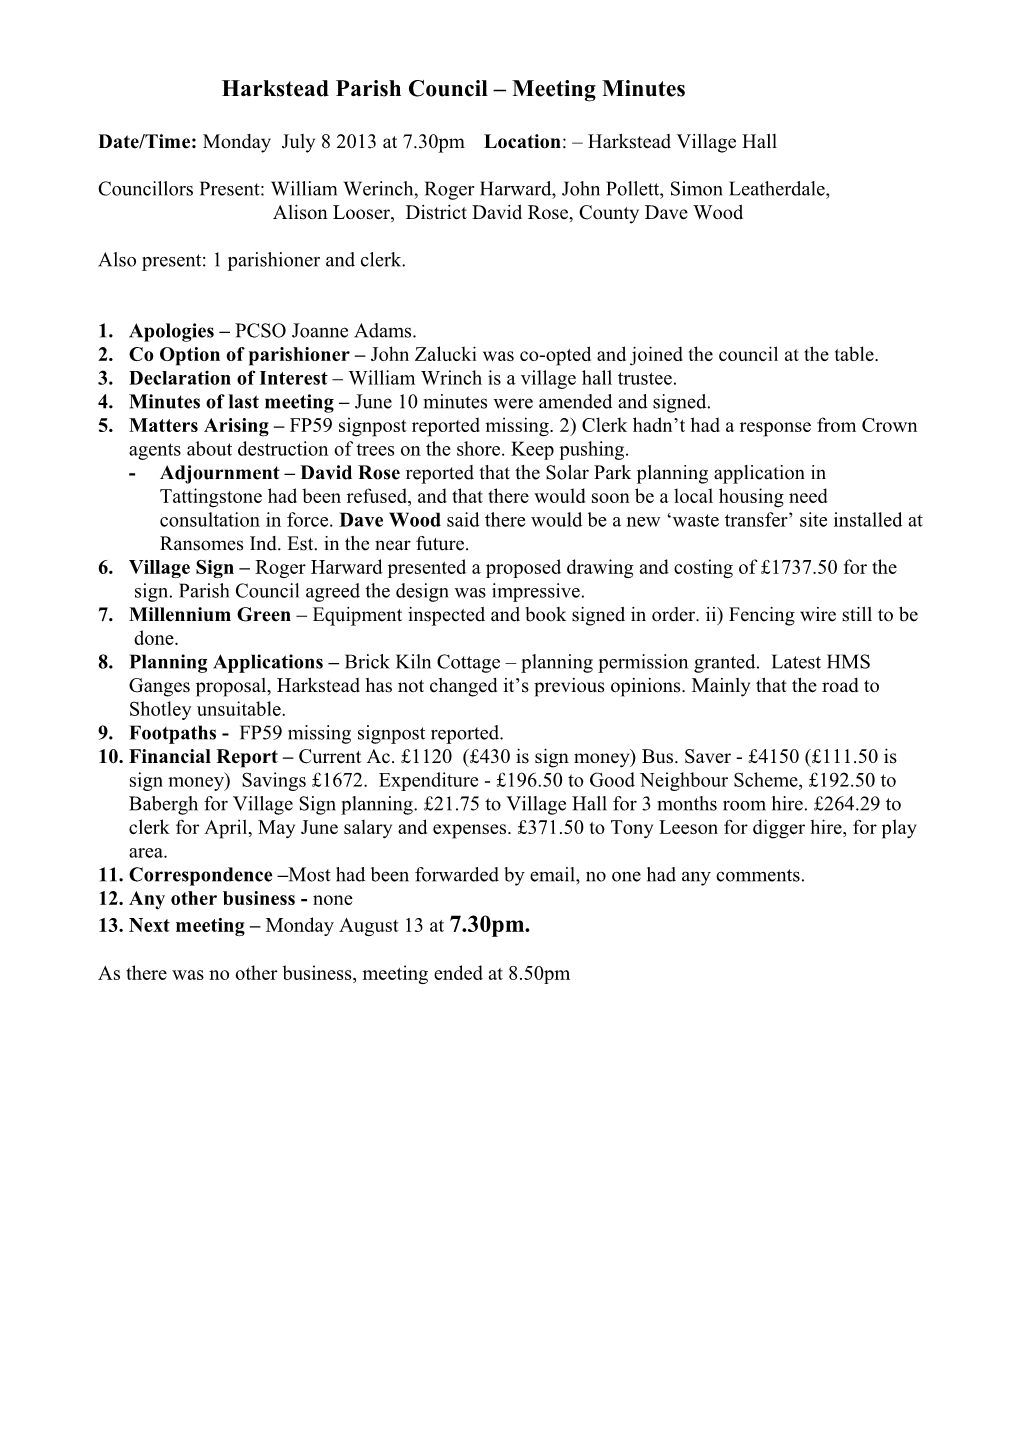 Harkstead Parish Council Meeting Minutes s1